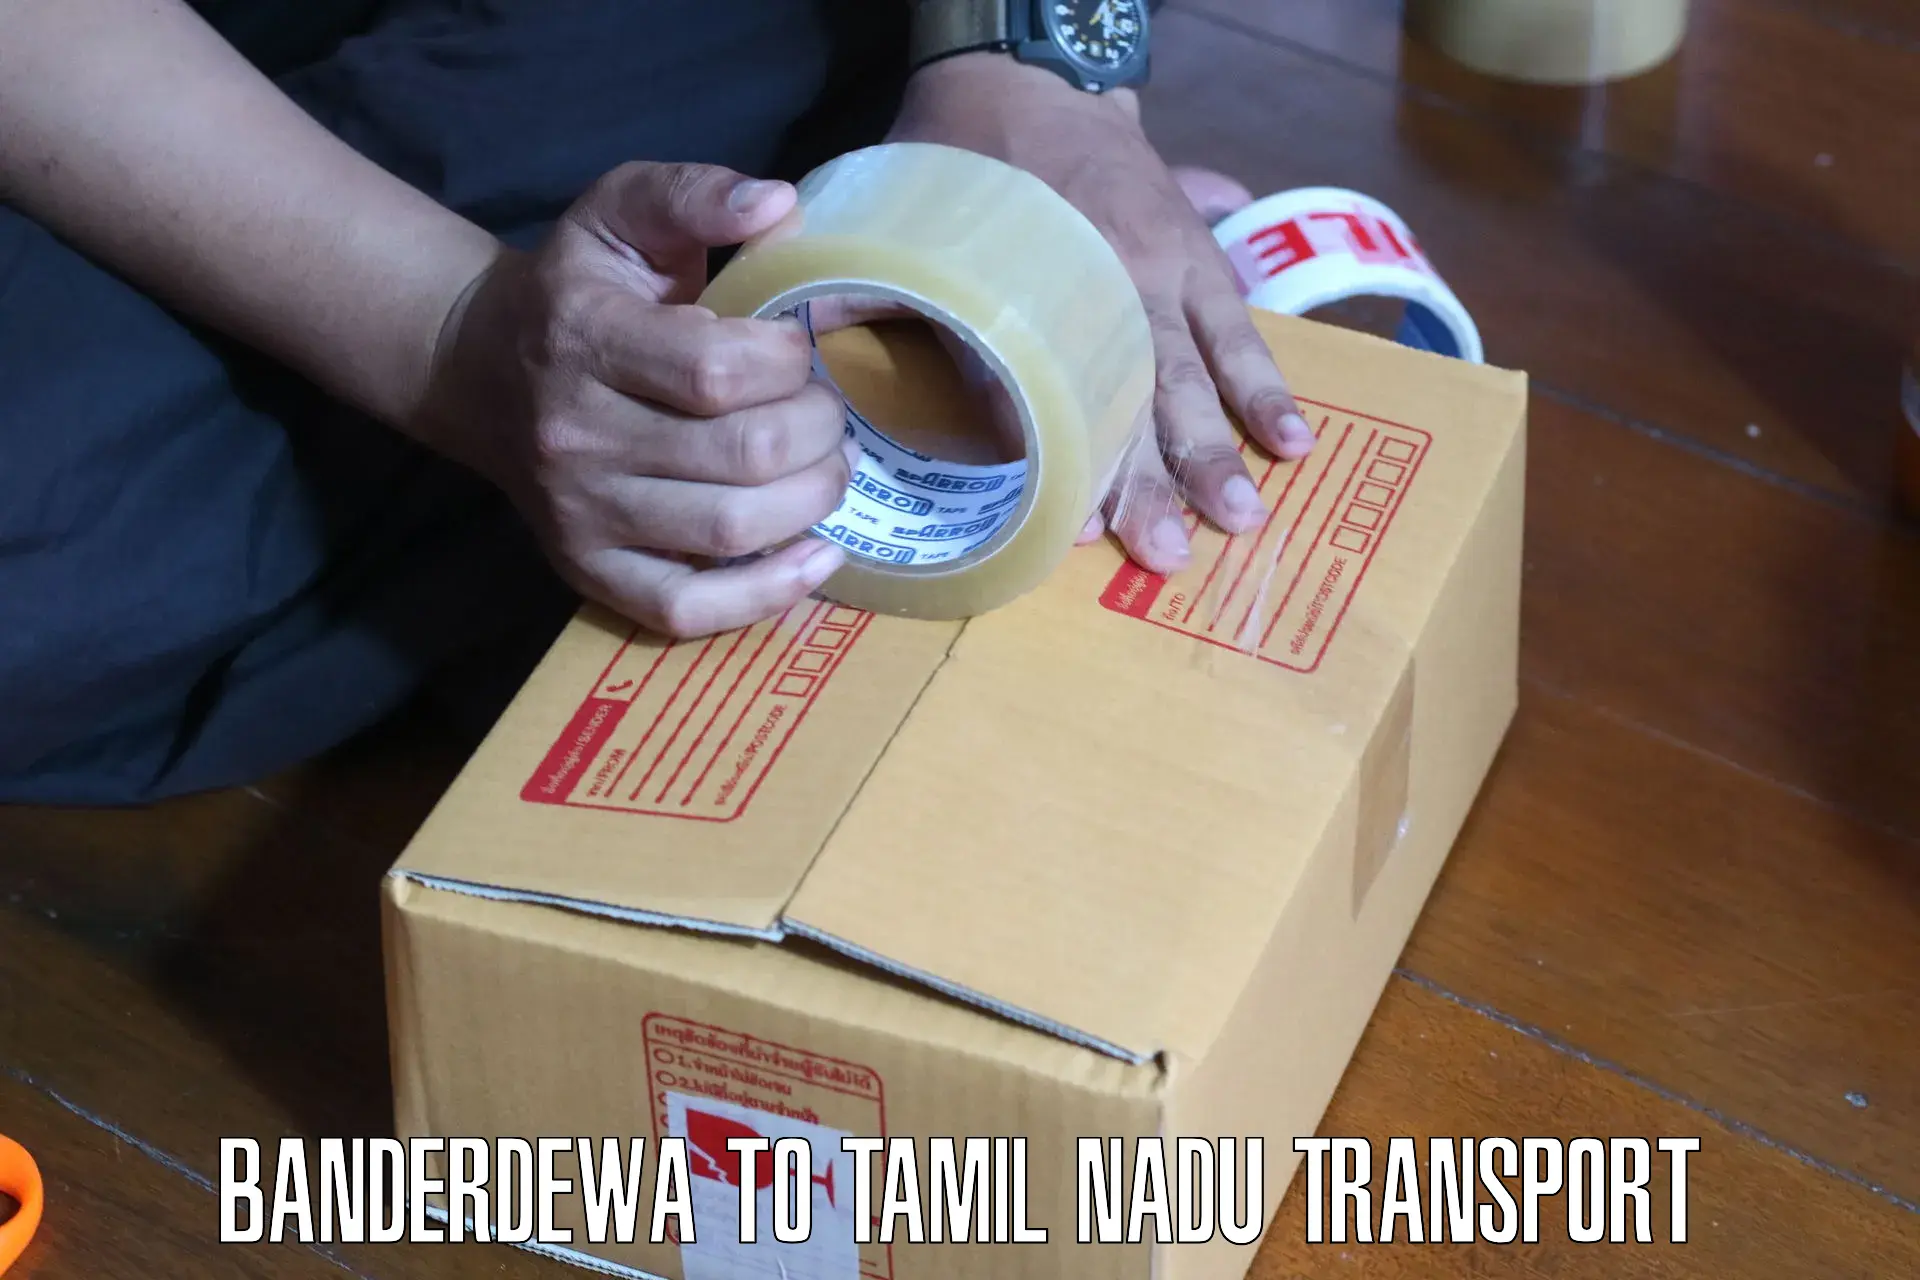 Truck transport companies in India Banderdewa to Gummidipoondi